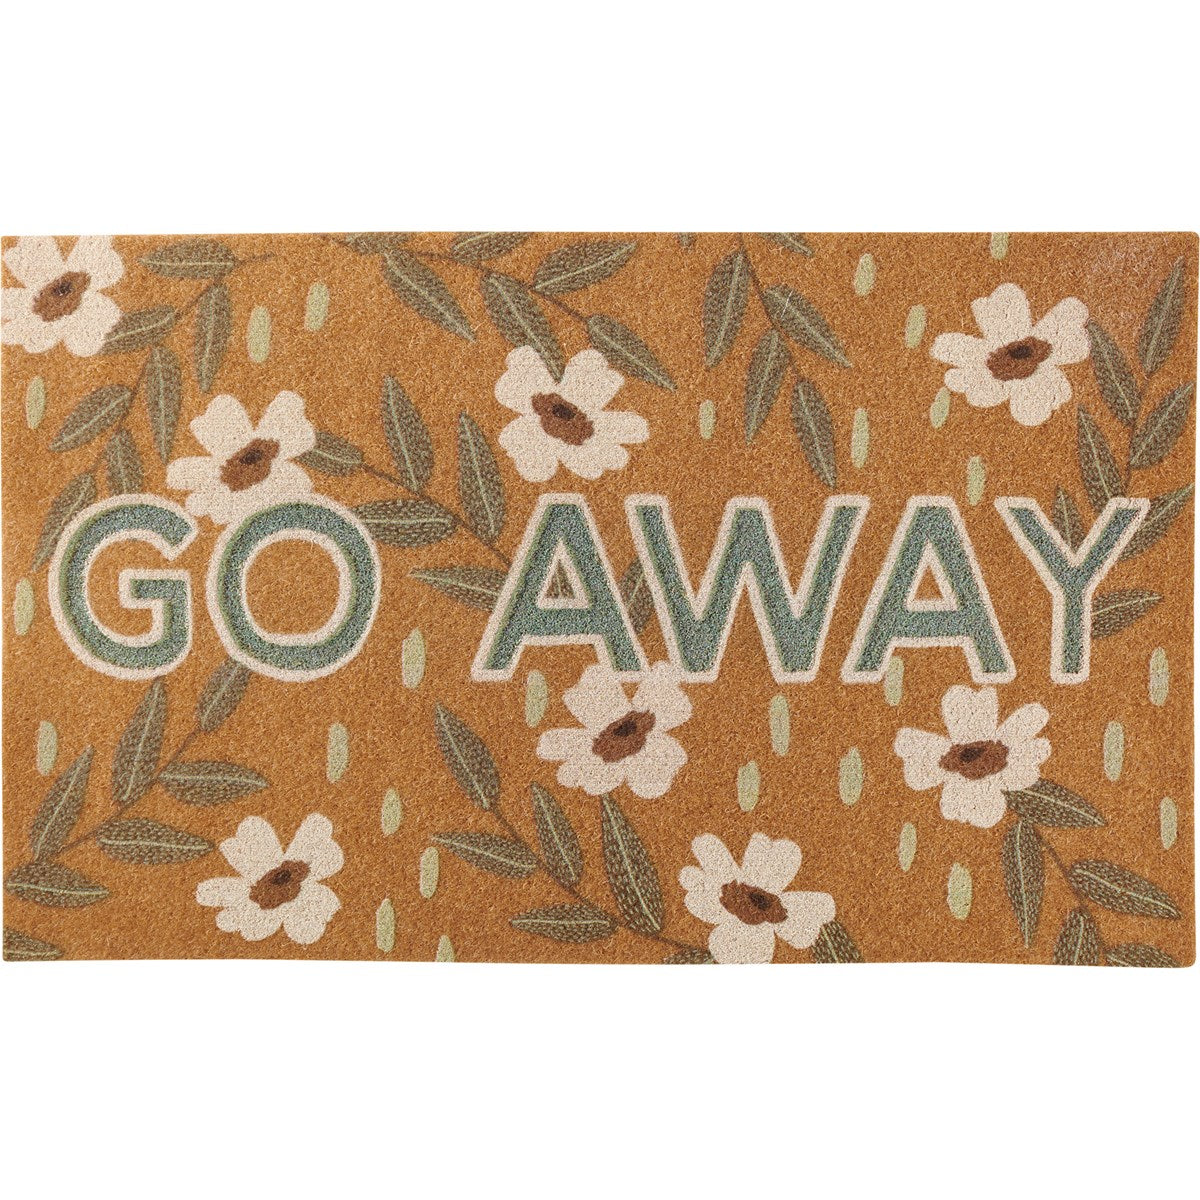 Outdoor rug with go away 